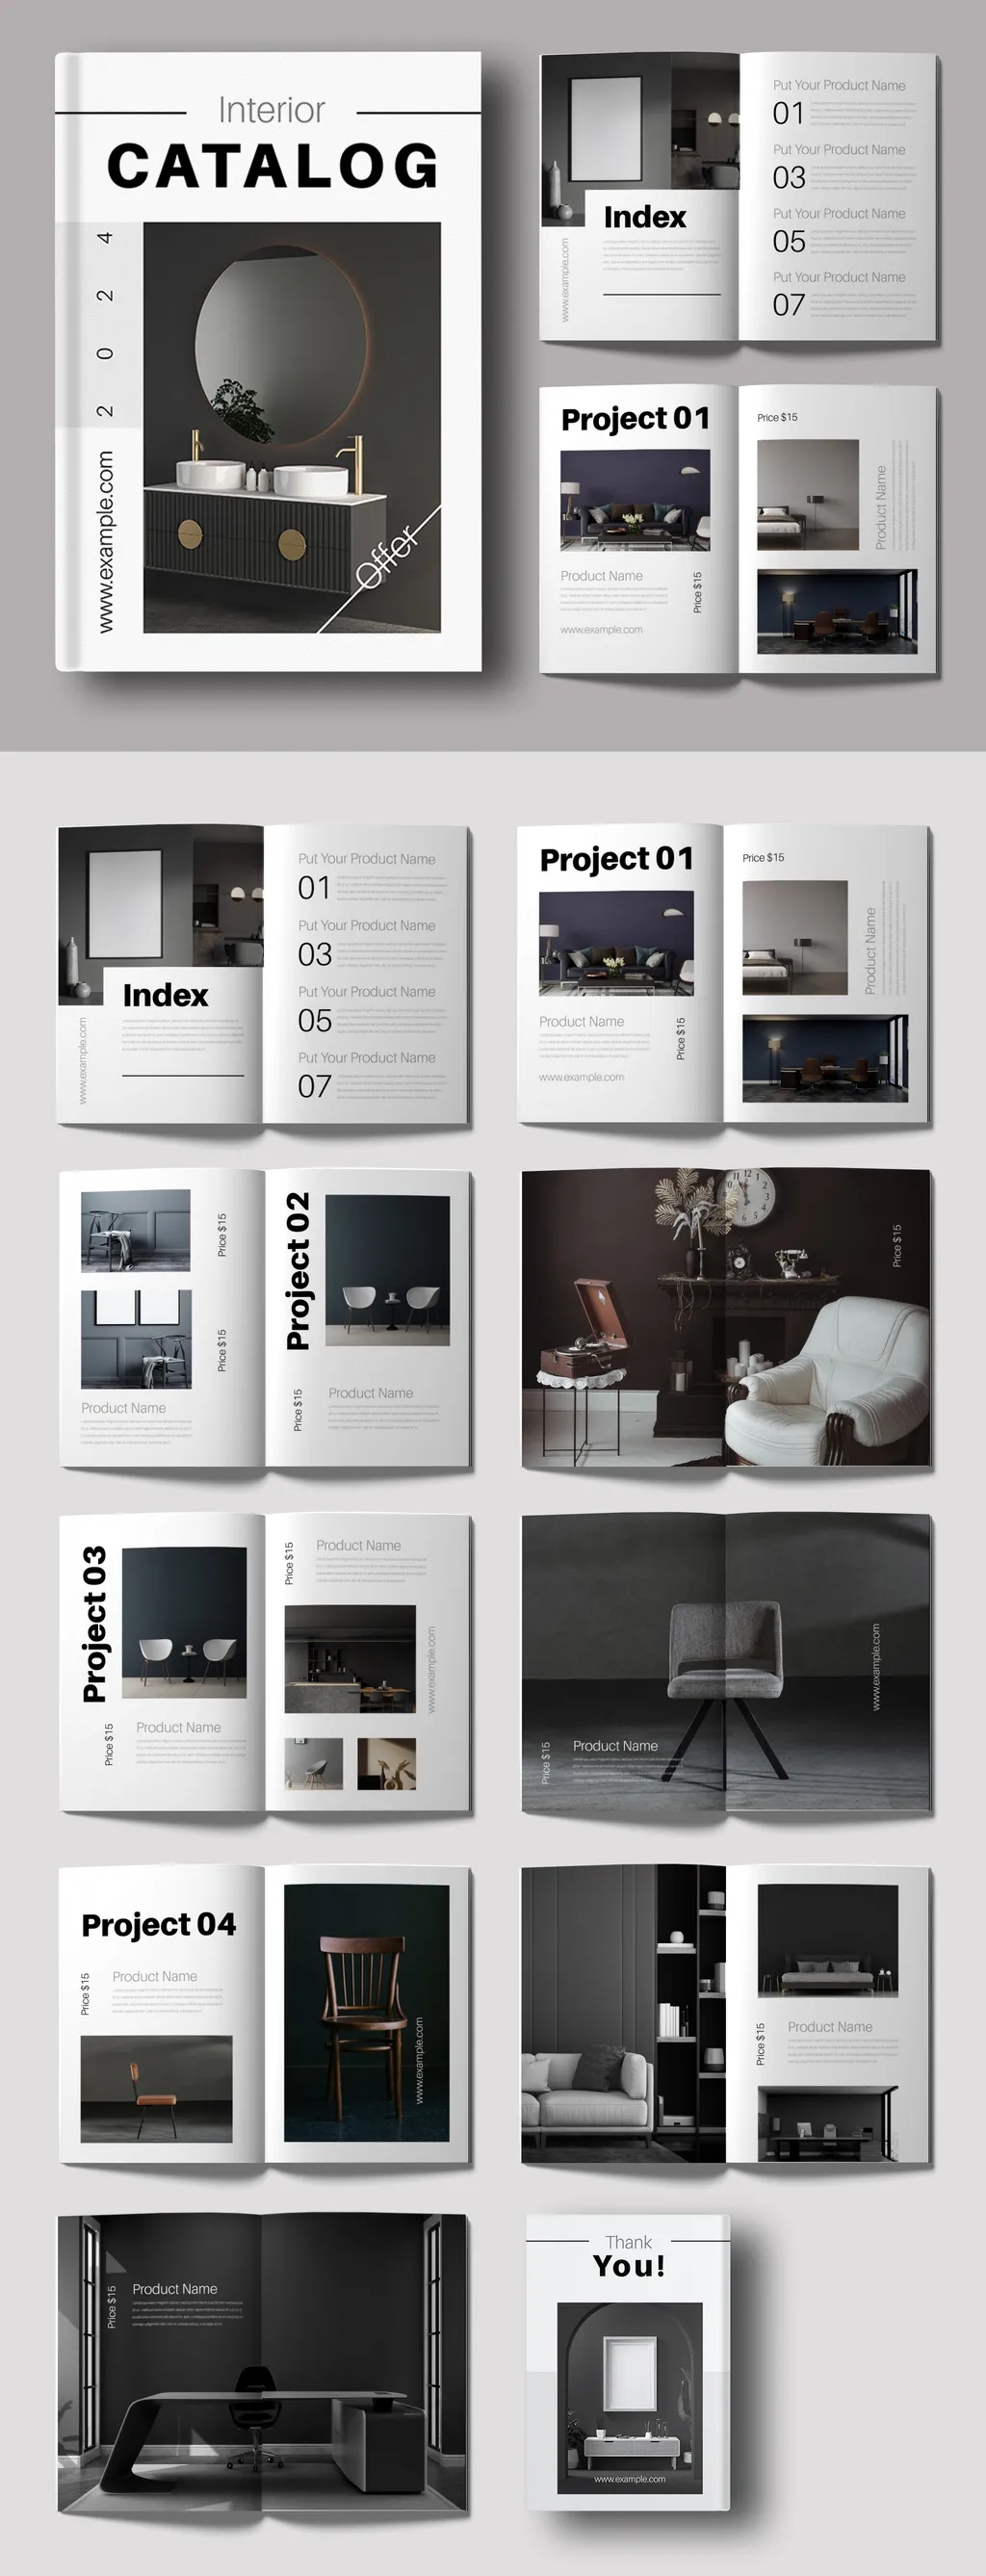 Adobestock - Interior Catalog Layout 722994344